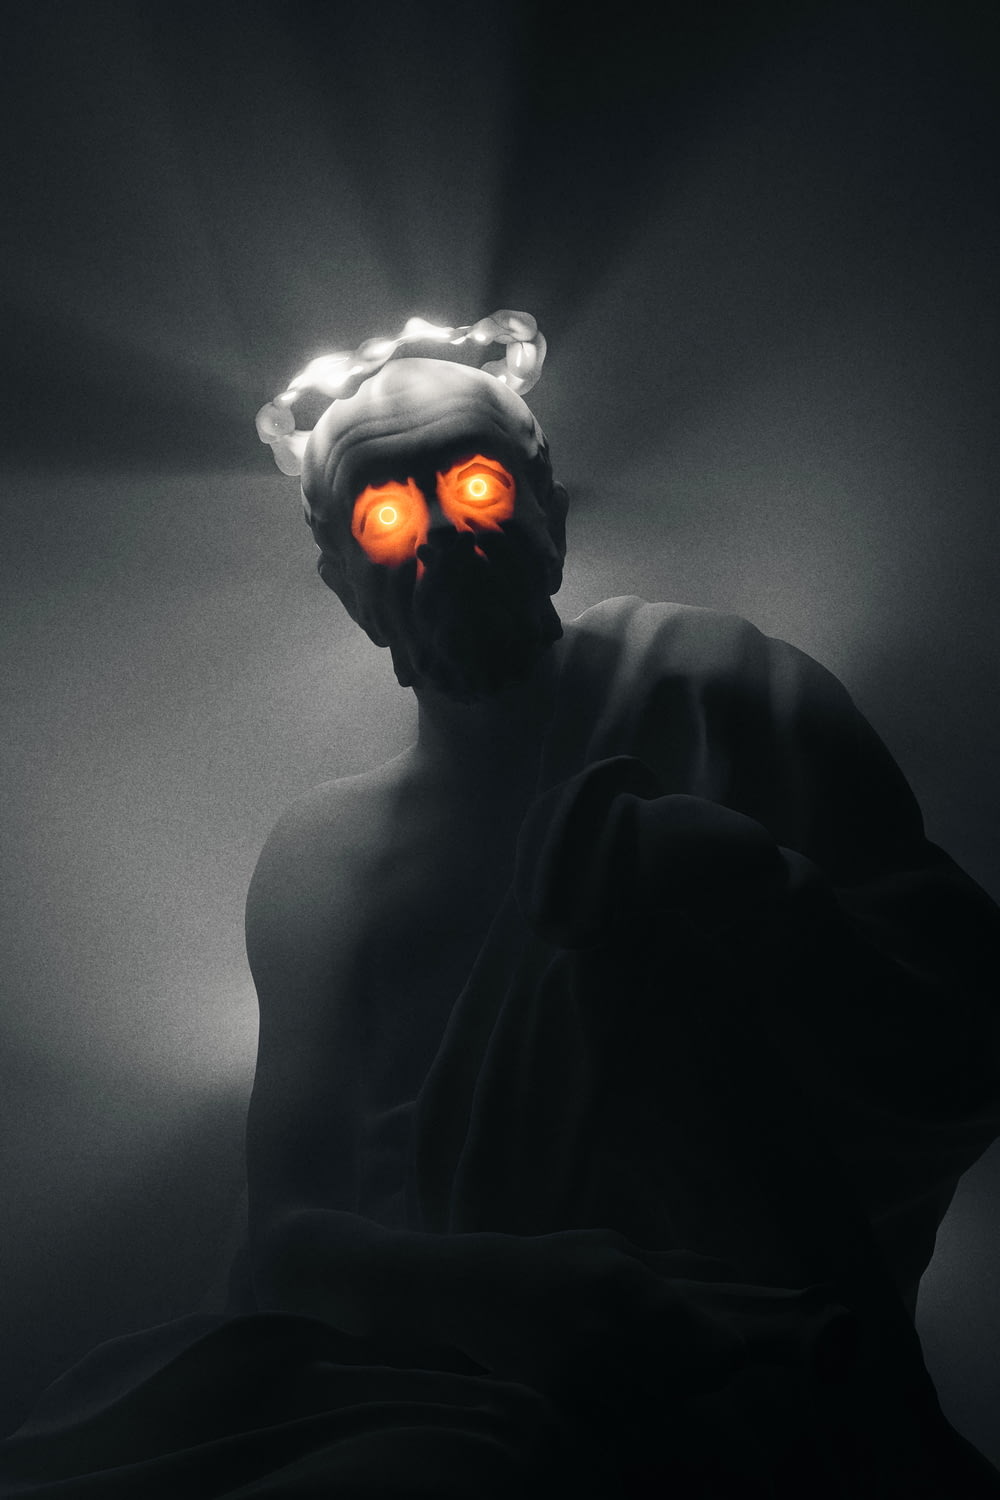 a man with glowing orange eyes in a dark room